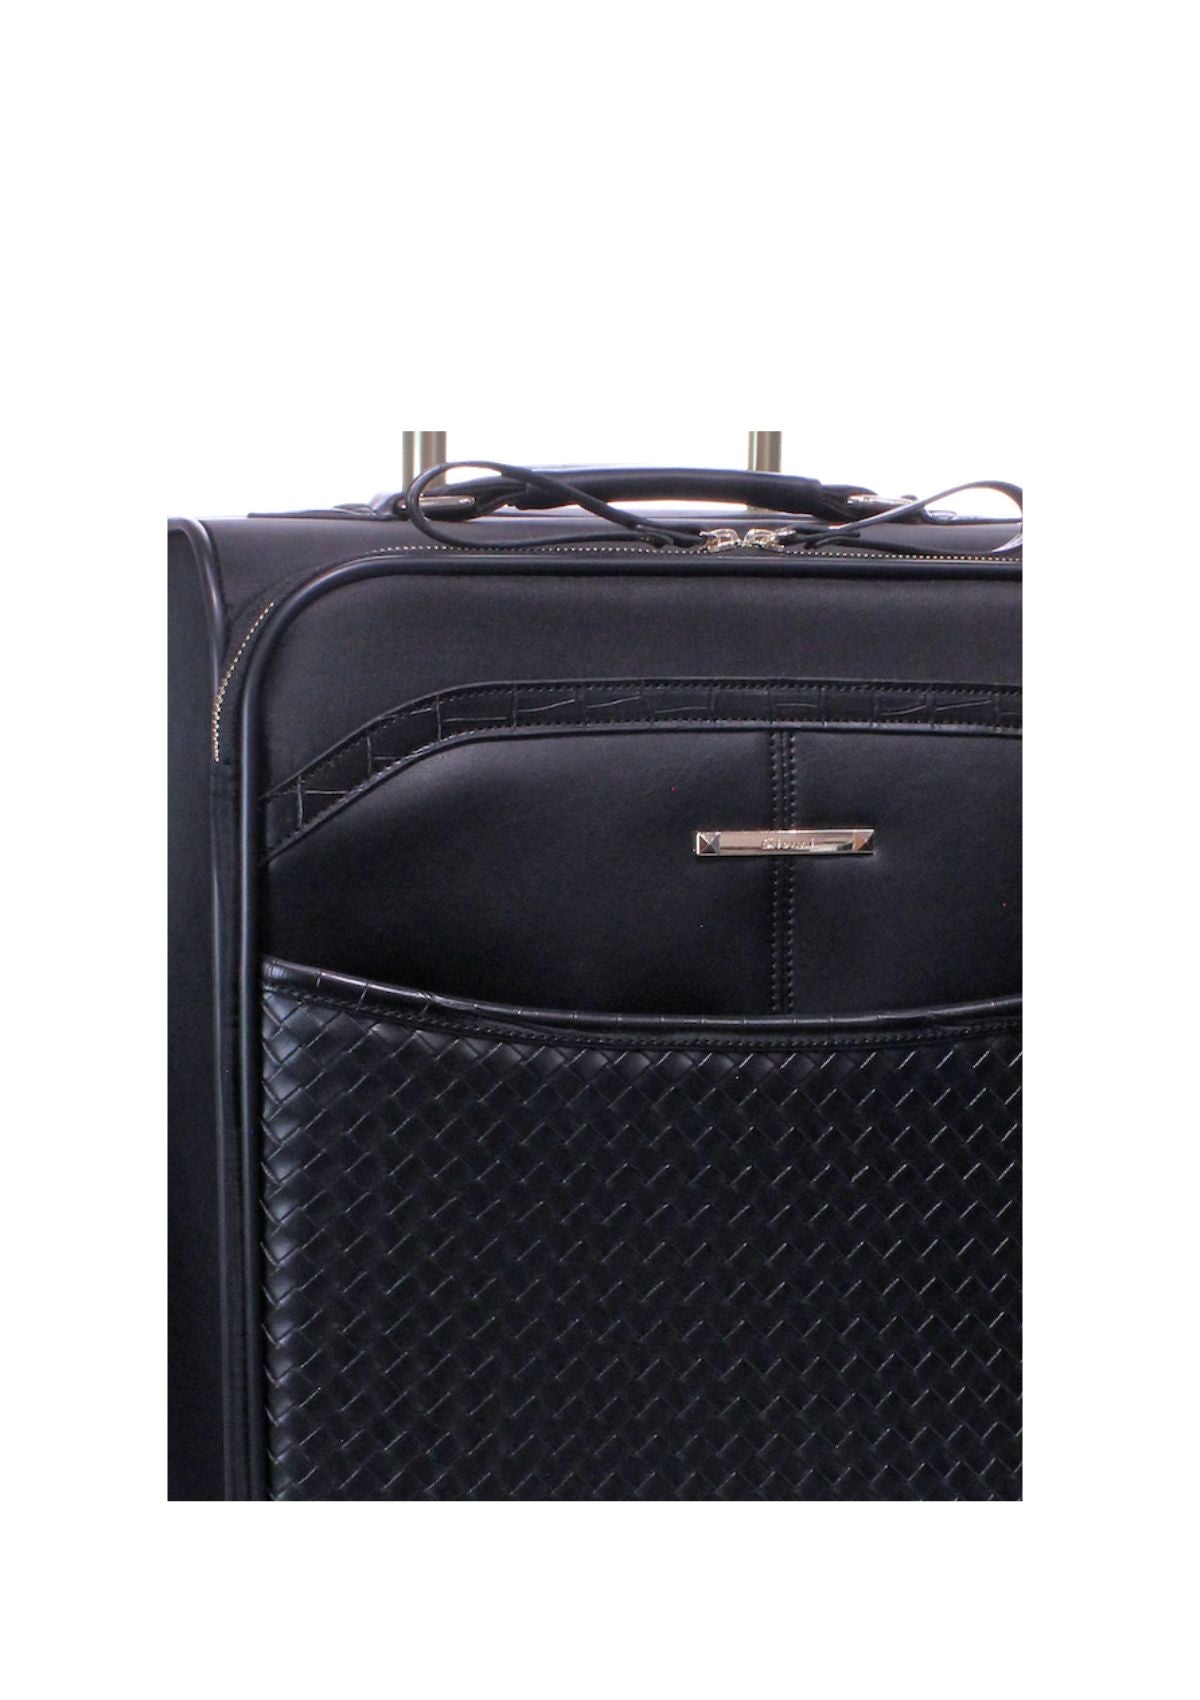 Gianni Fashion Luggage Black